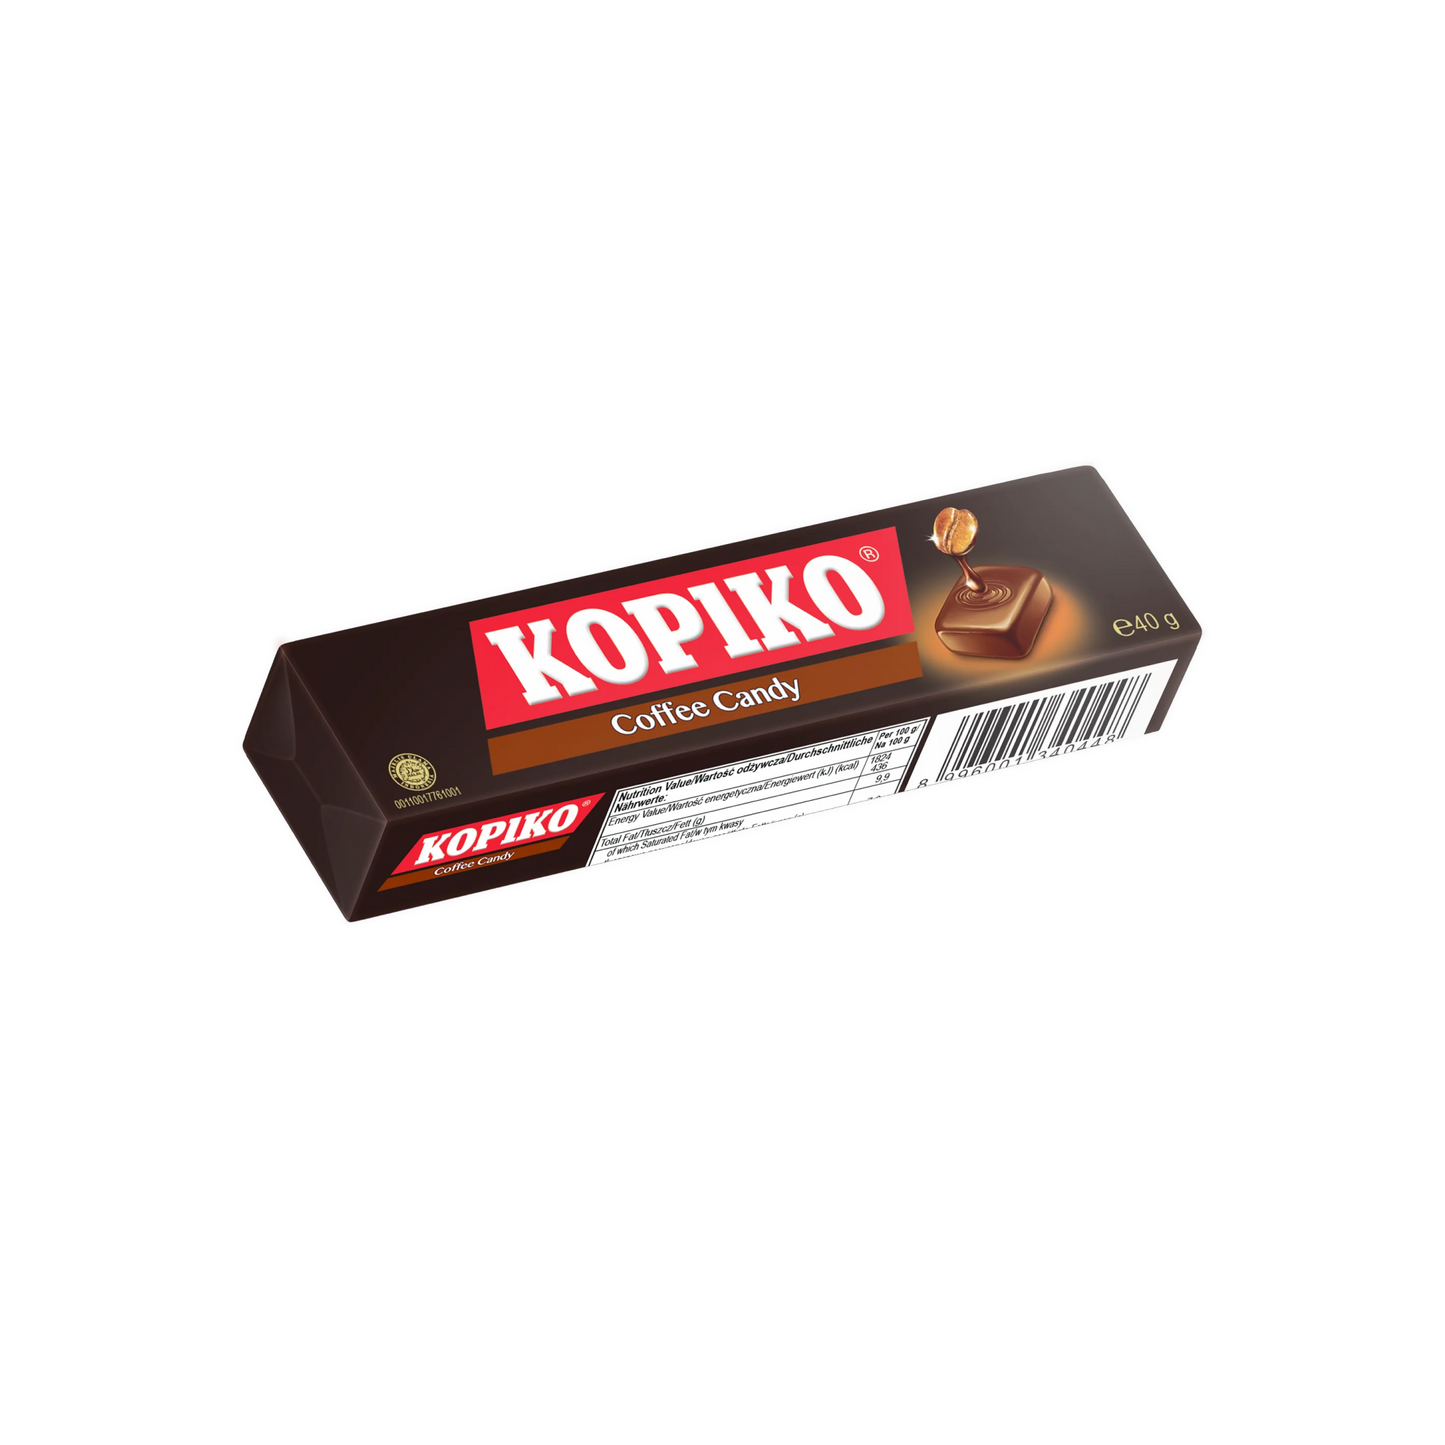 Kopiko Coffee Candy 40g